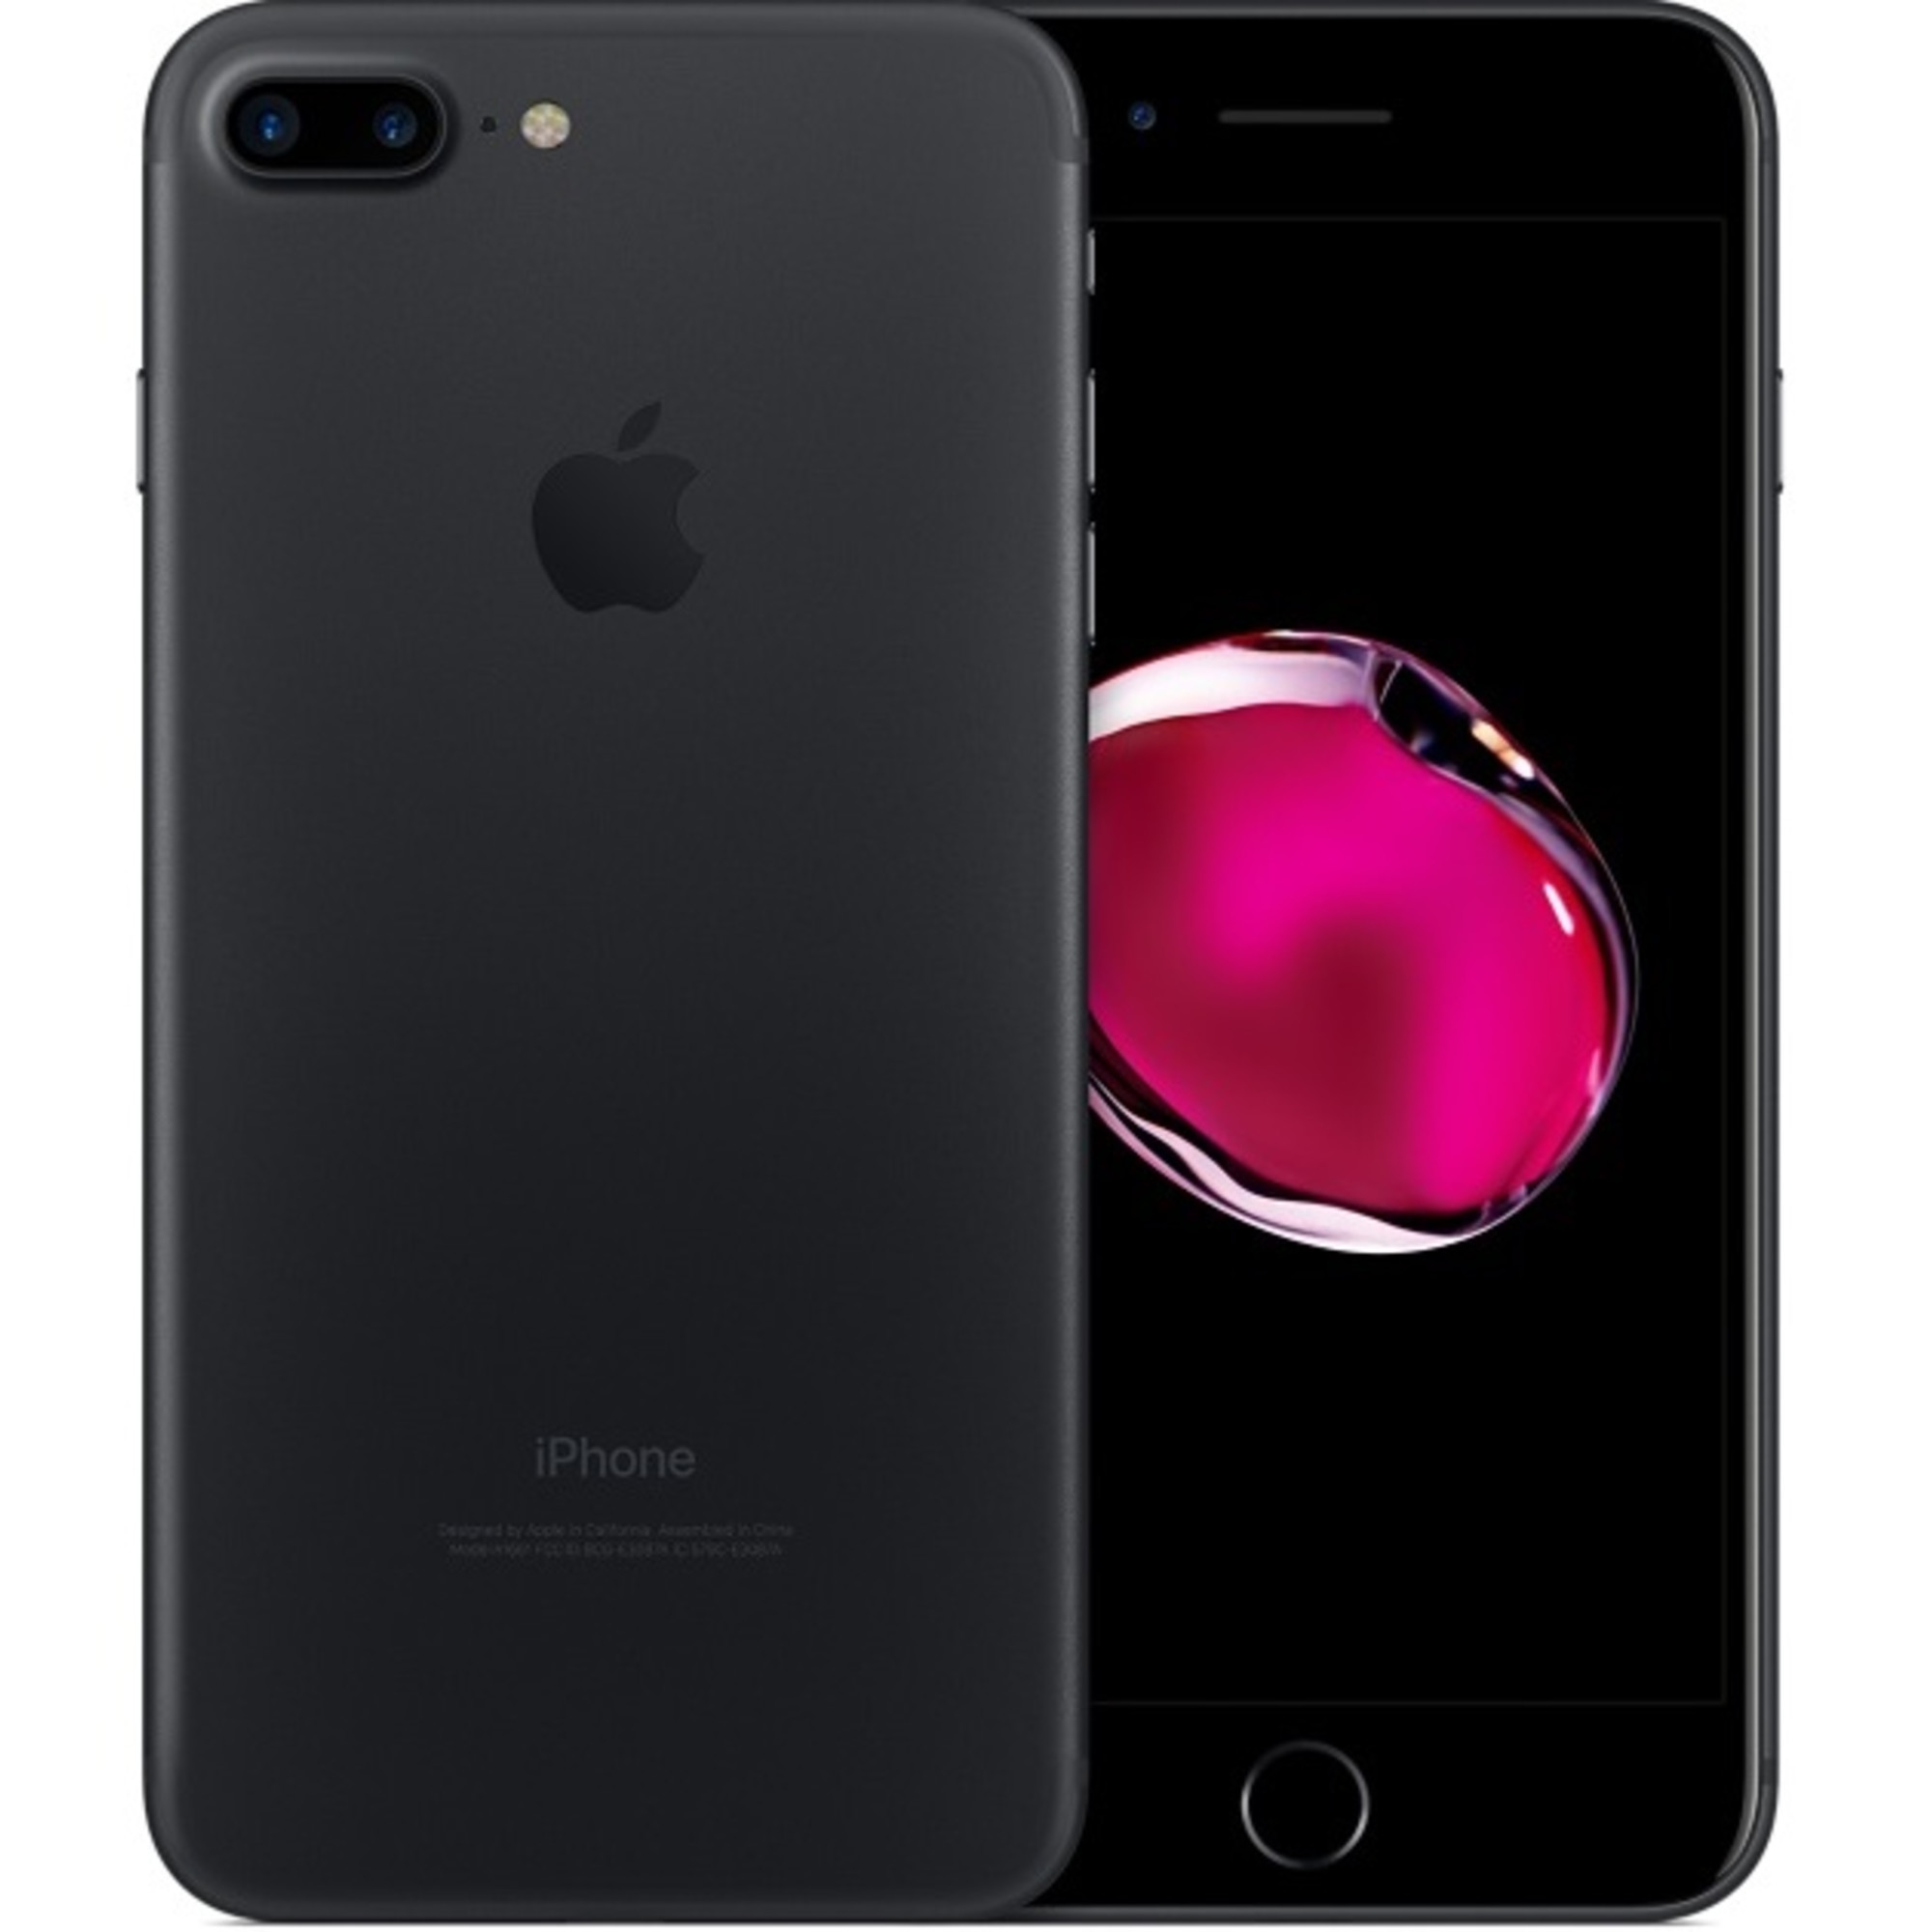 Apple Iphone 7 256gb Unlocked Gsm Quad Core 12mp Phone Certified